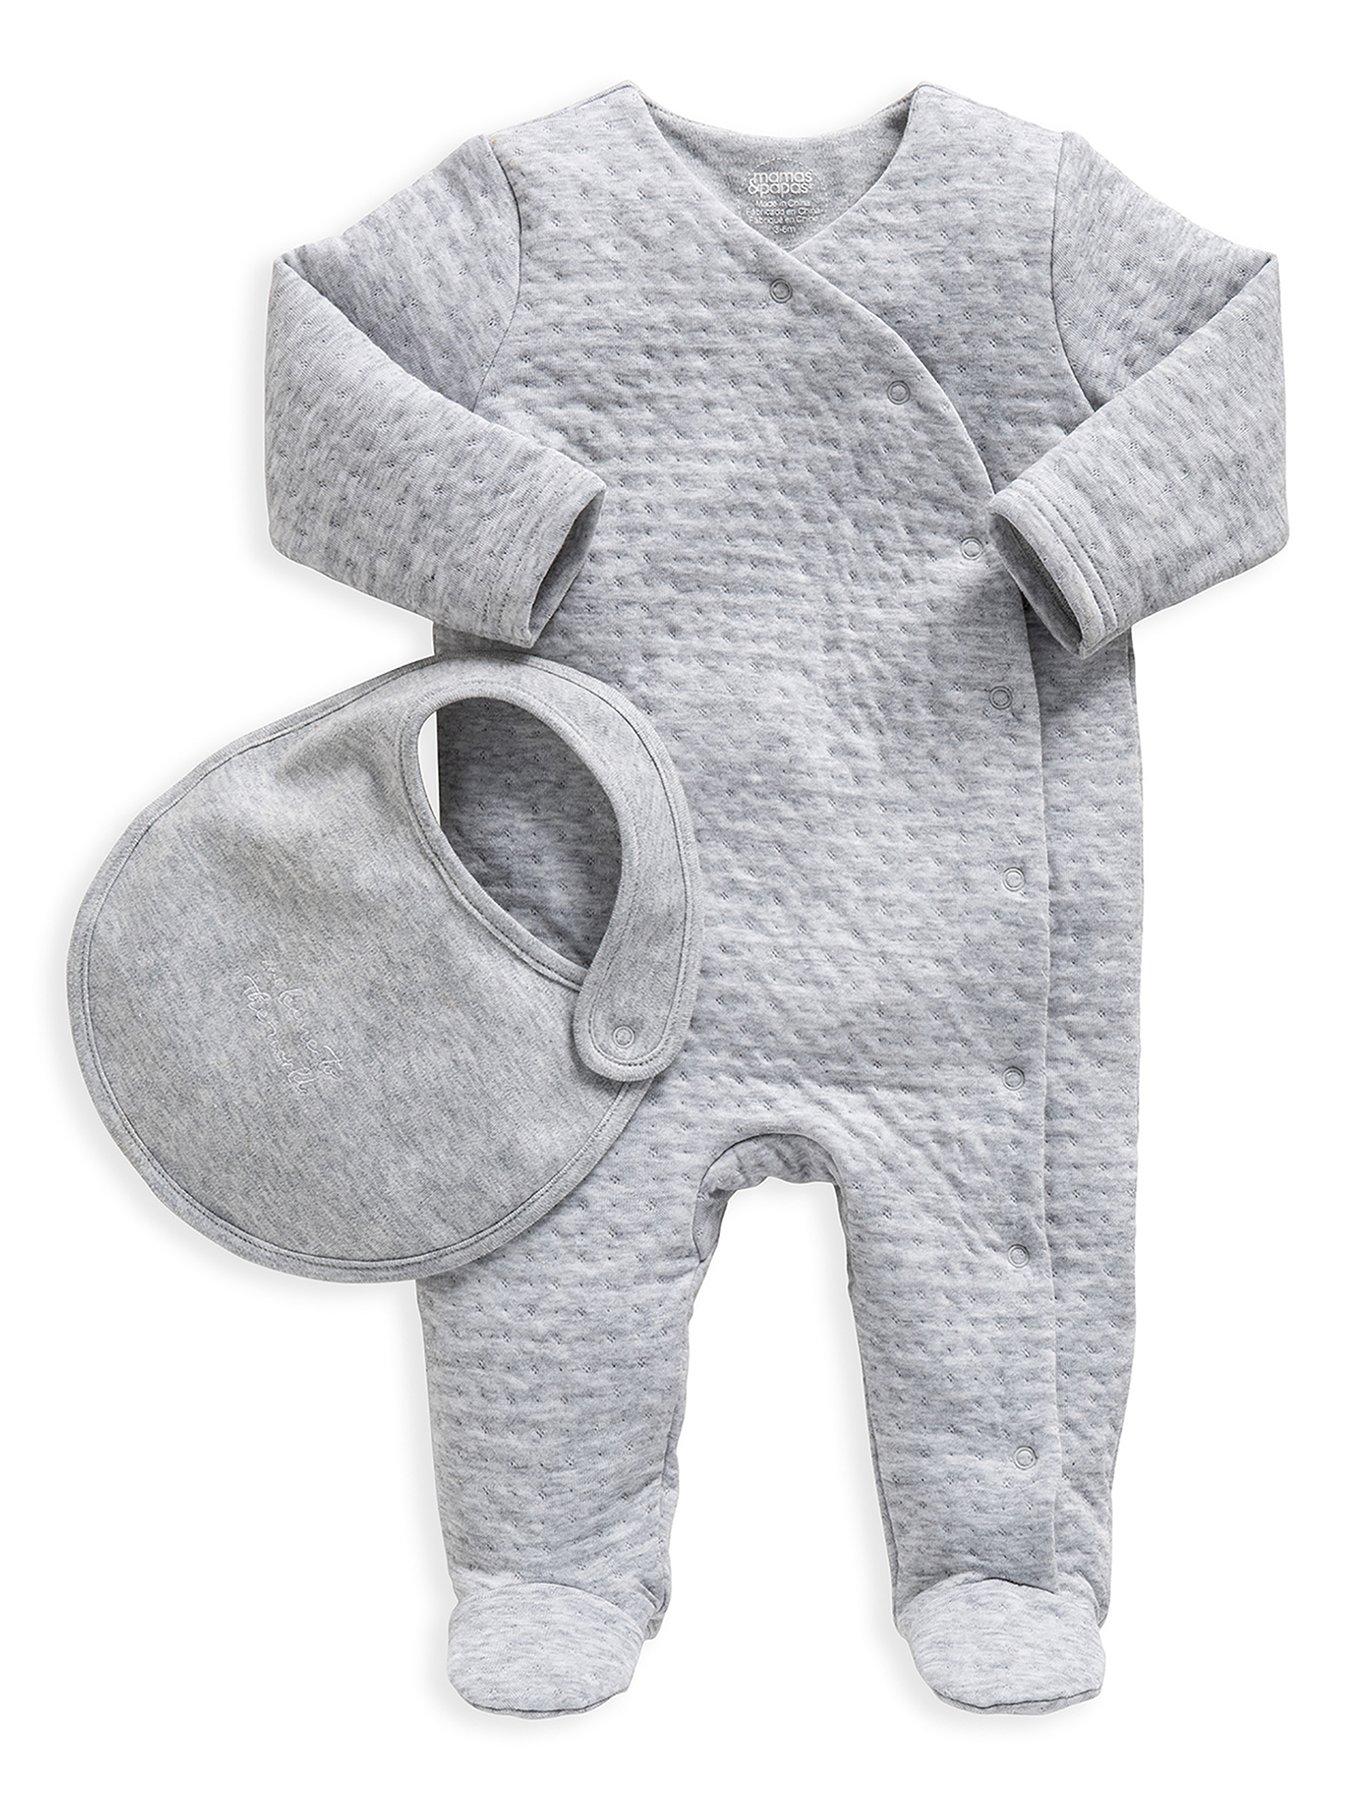 Kids Unisex Baby Textured Sleepsuit With Bib - Grey